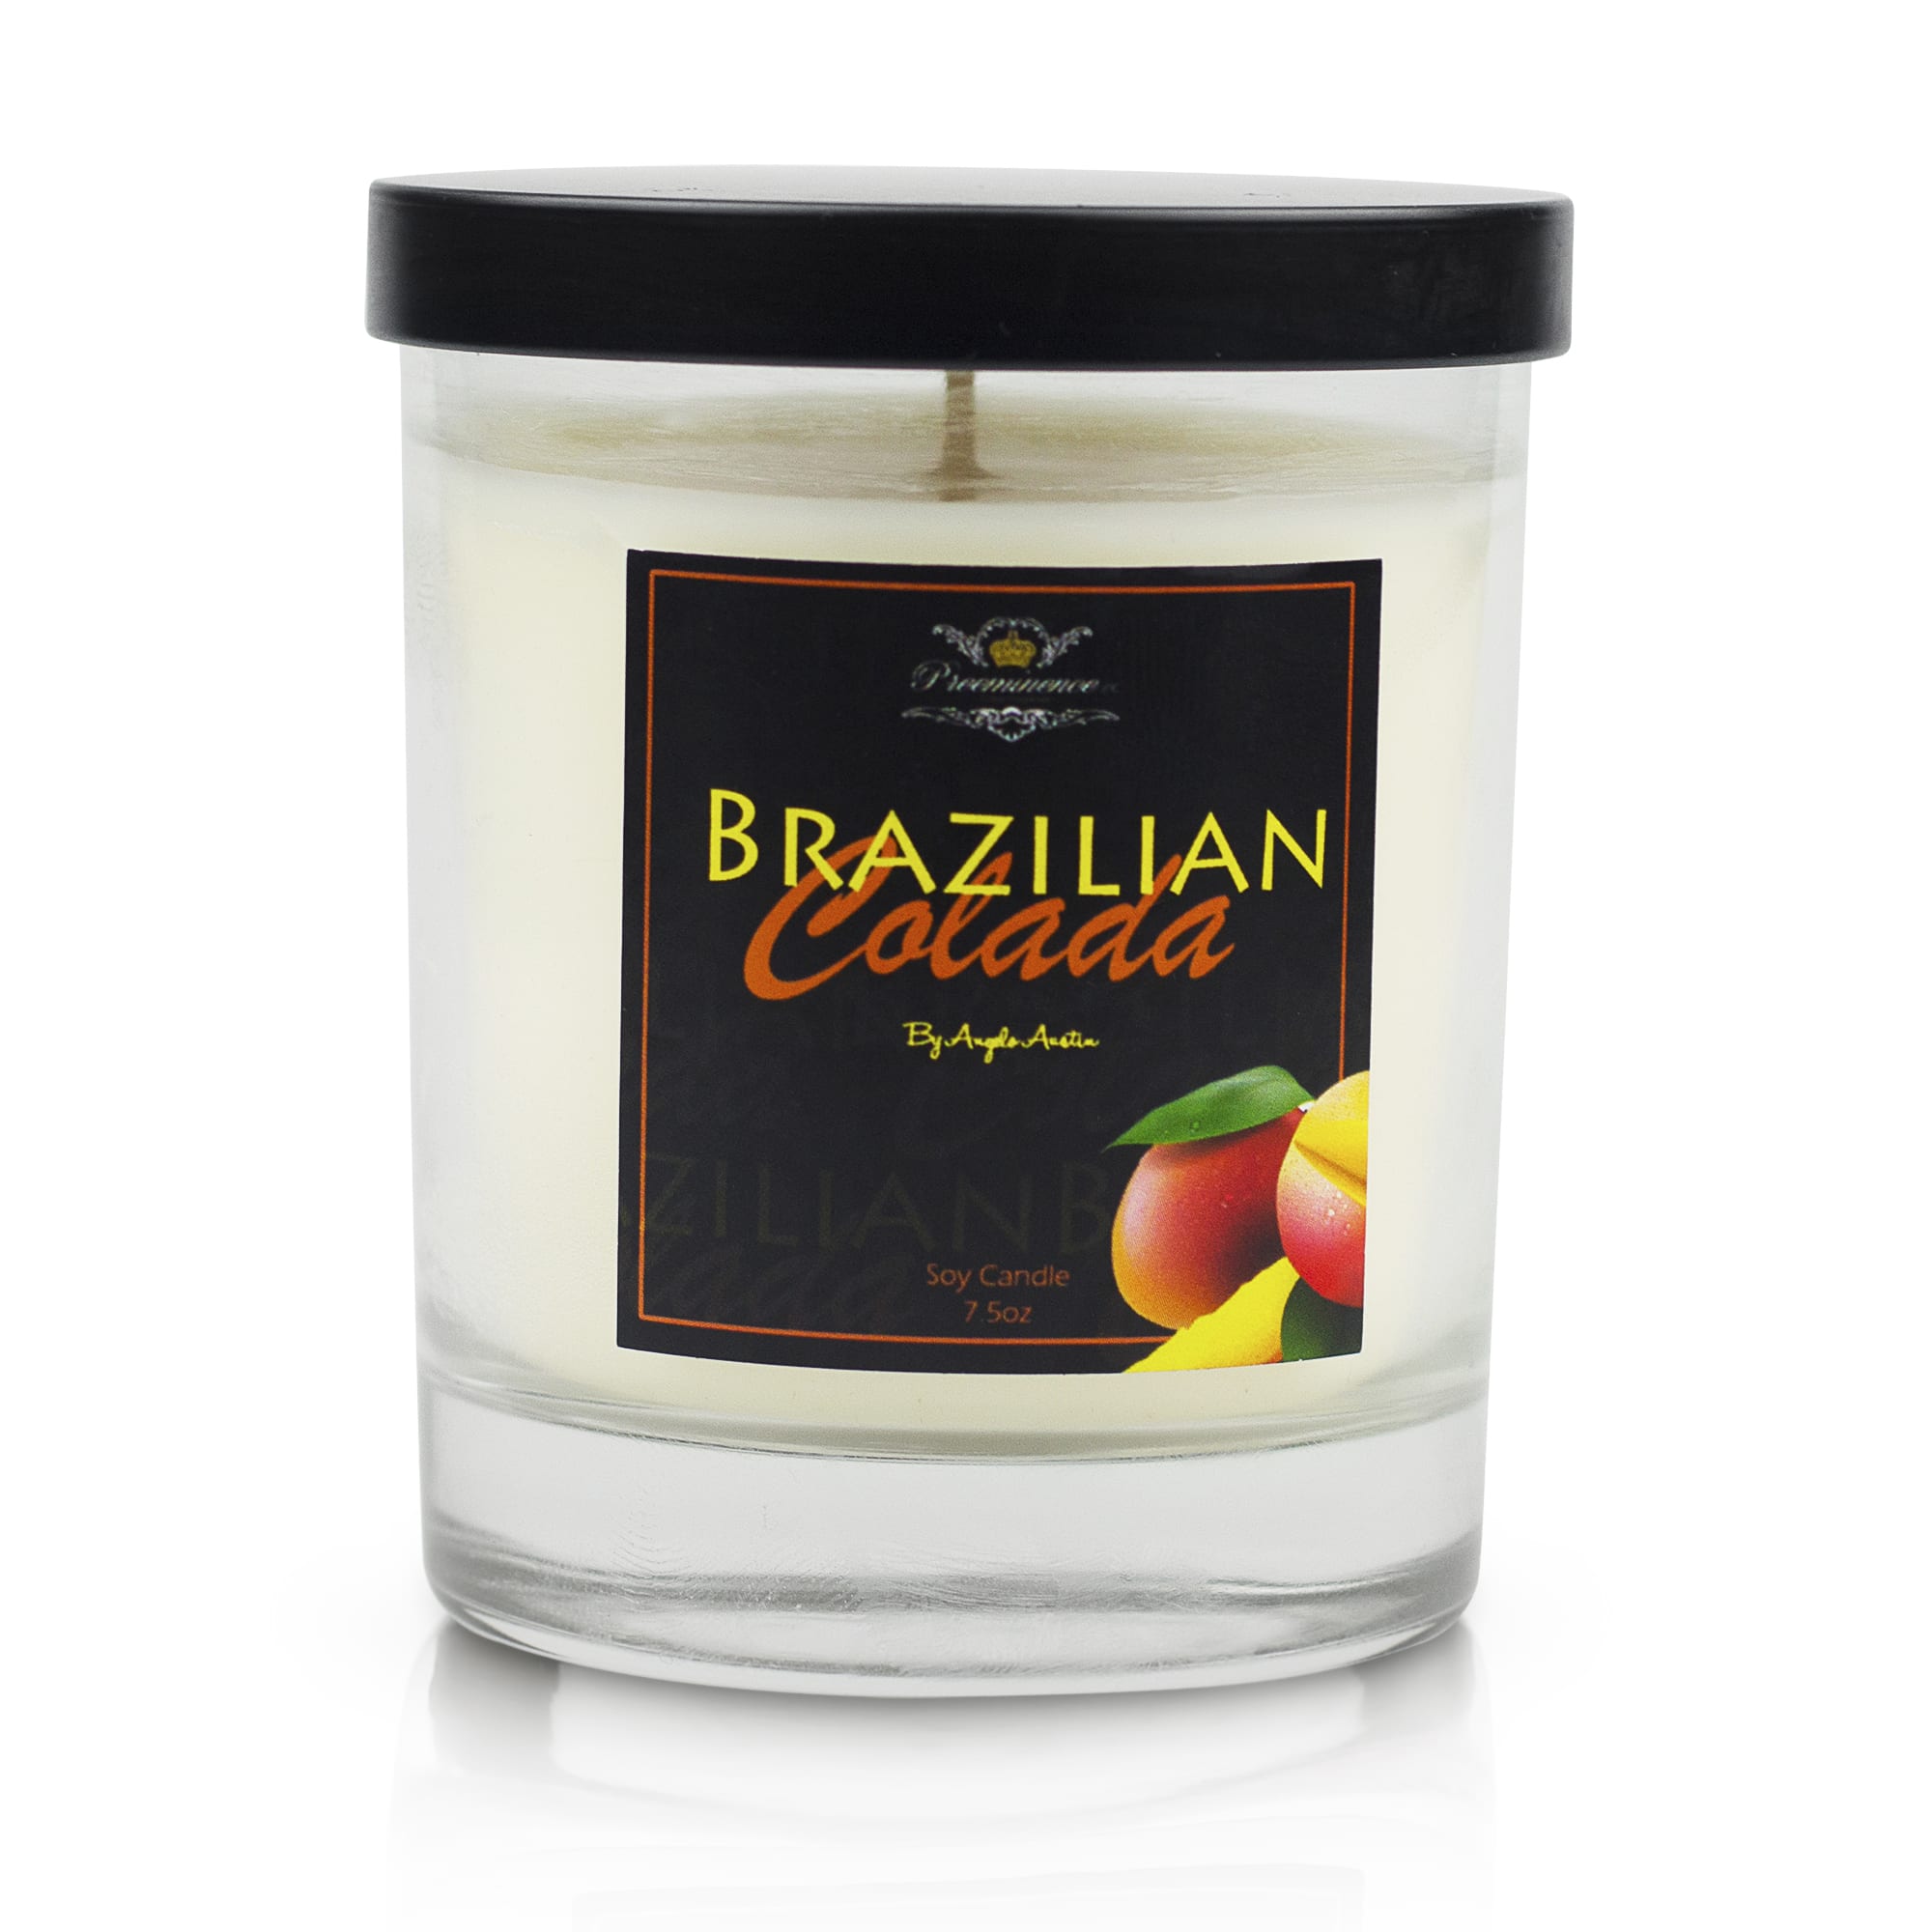 Brazilian Colada Soy Candle - Preeminence- Custom Fragrance and 